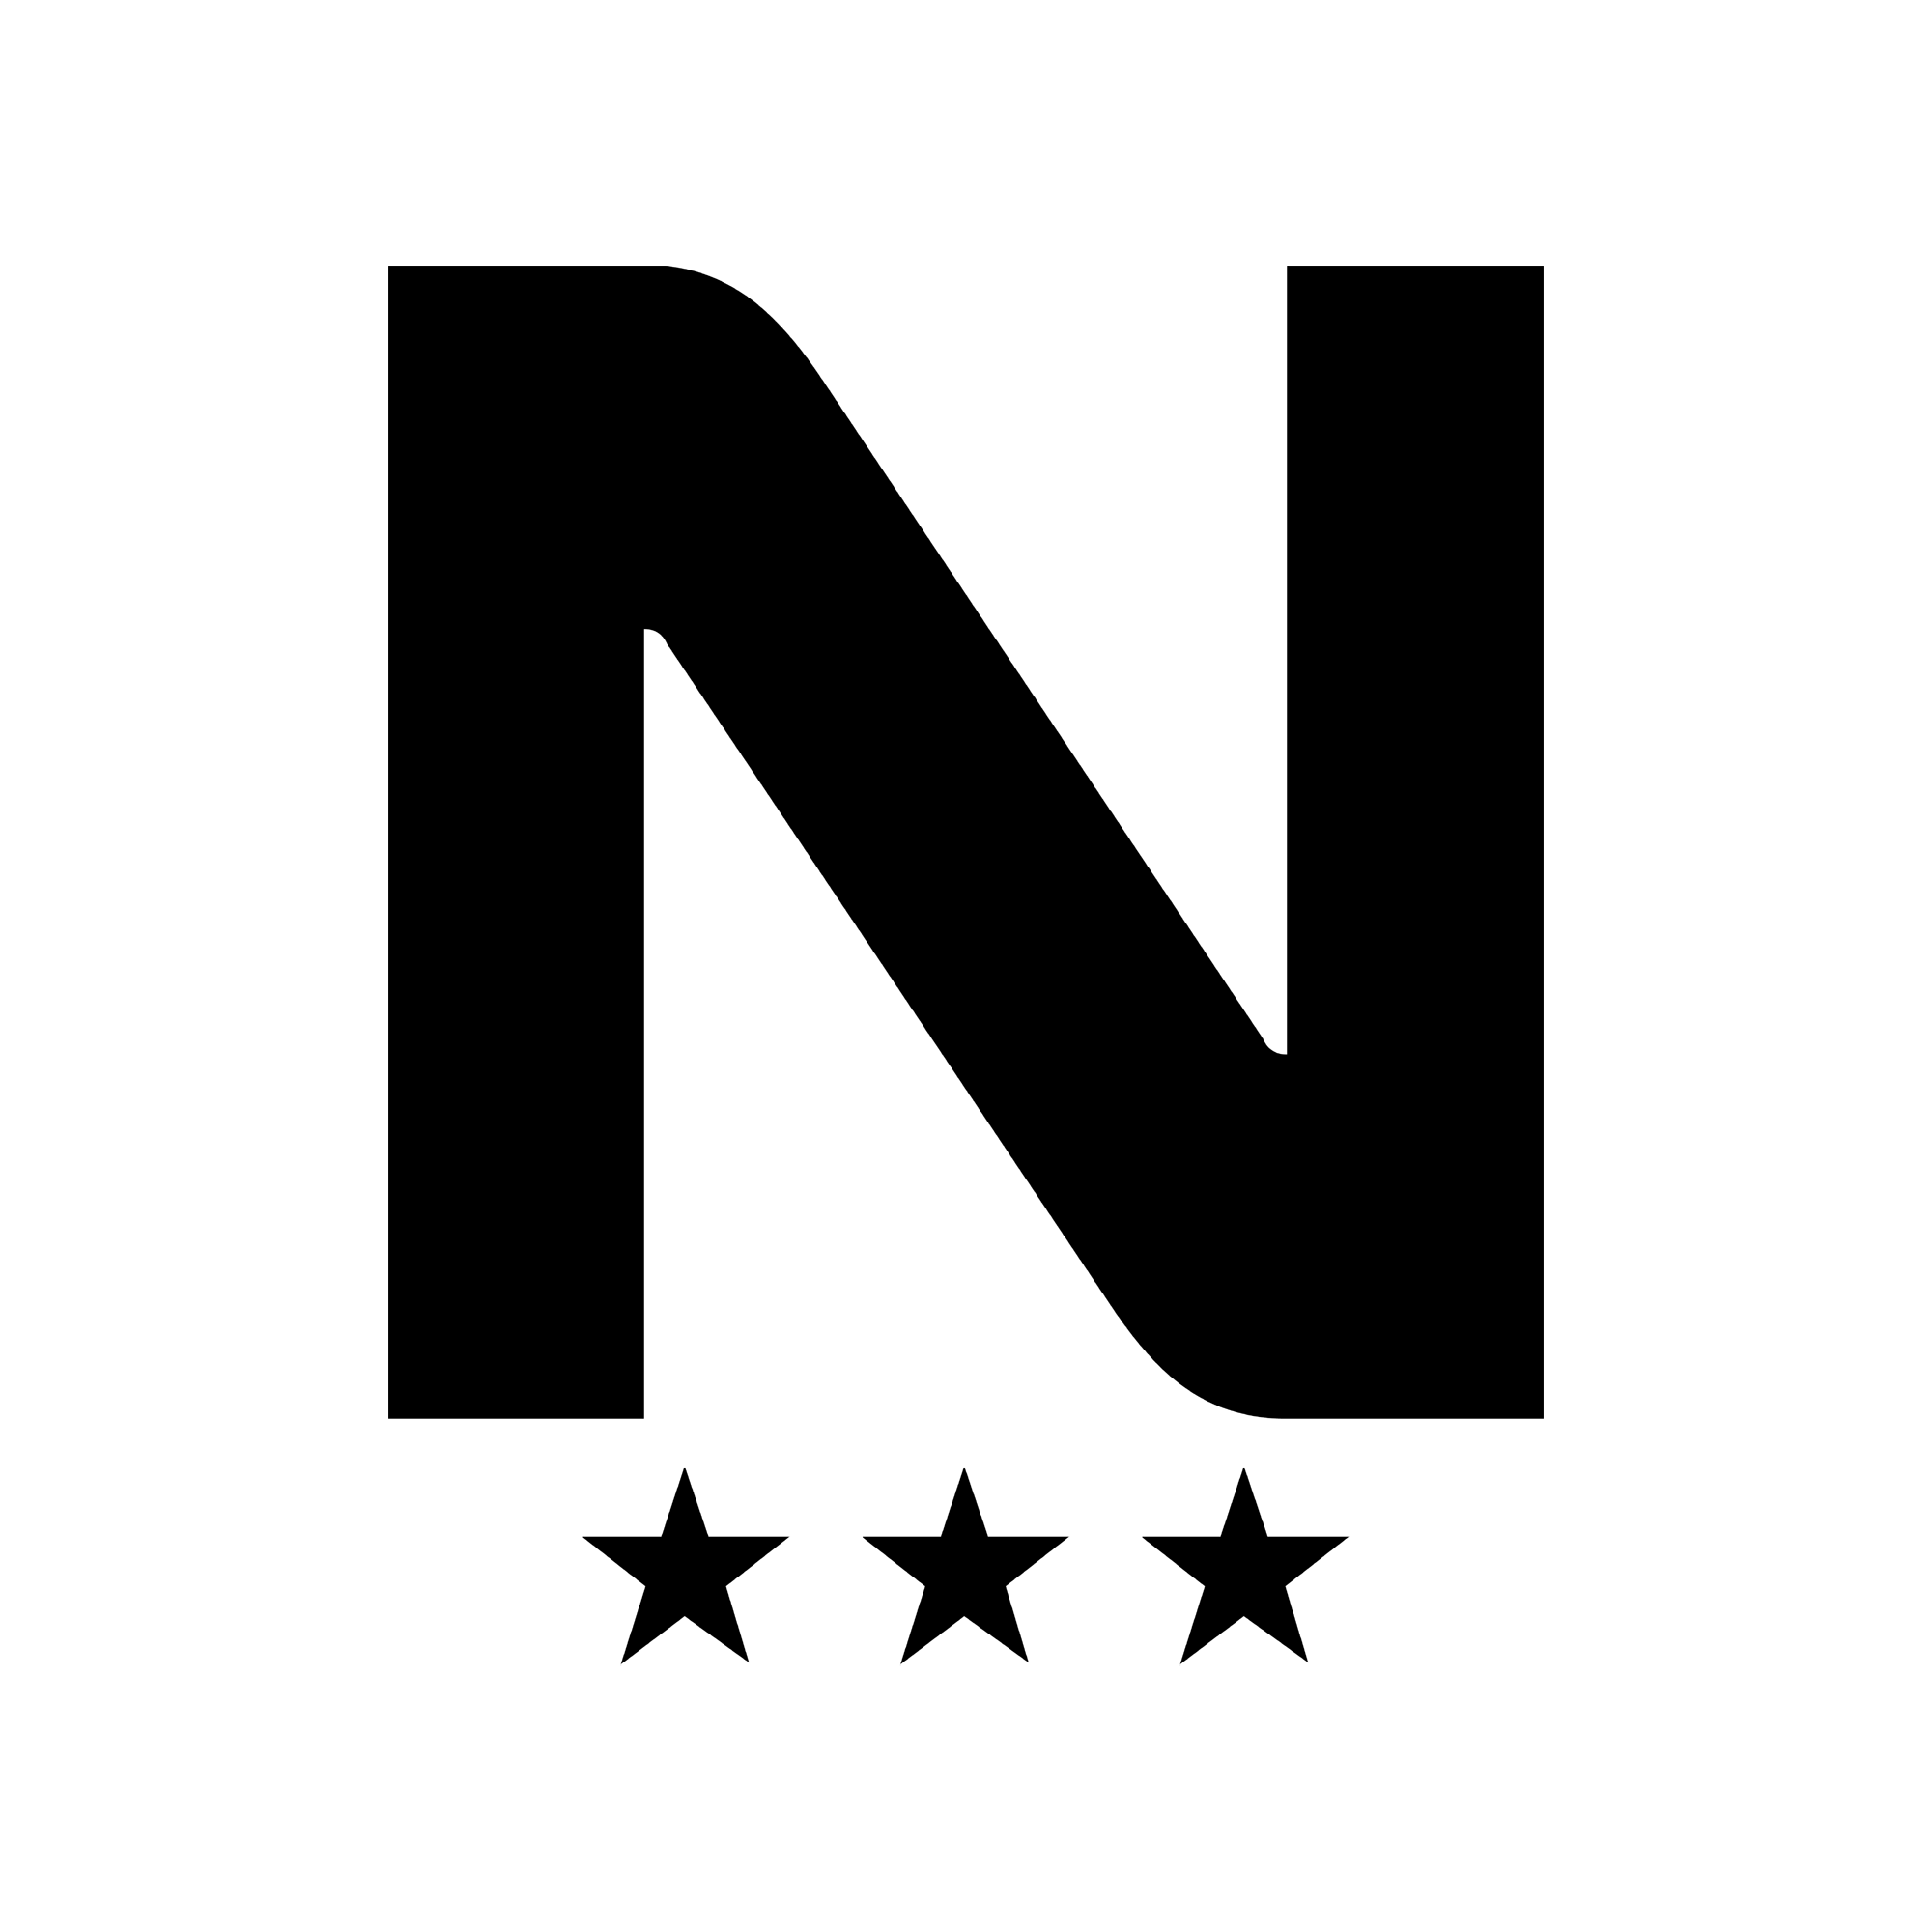 NPP Logo - NPP NATIONAL PROGRESS PARTY LOGO DESIGN.png